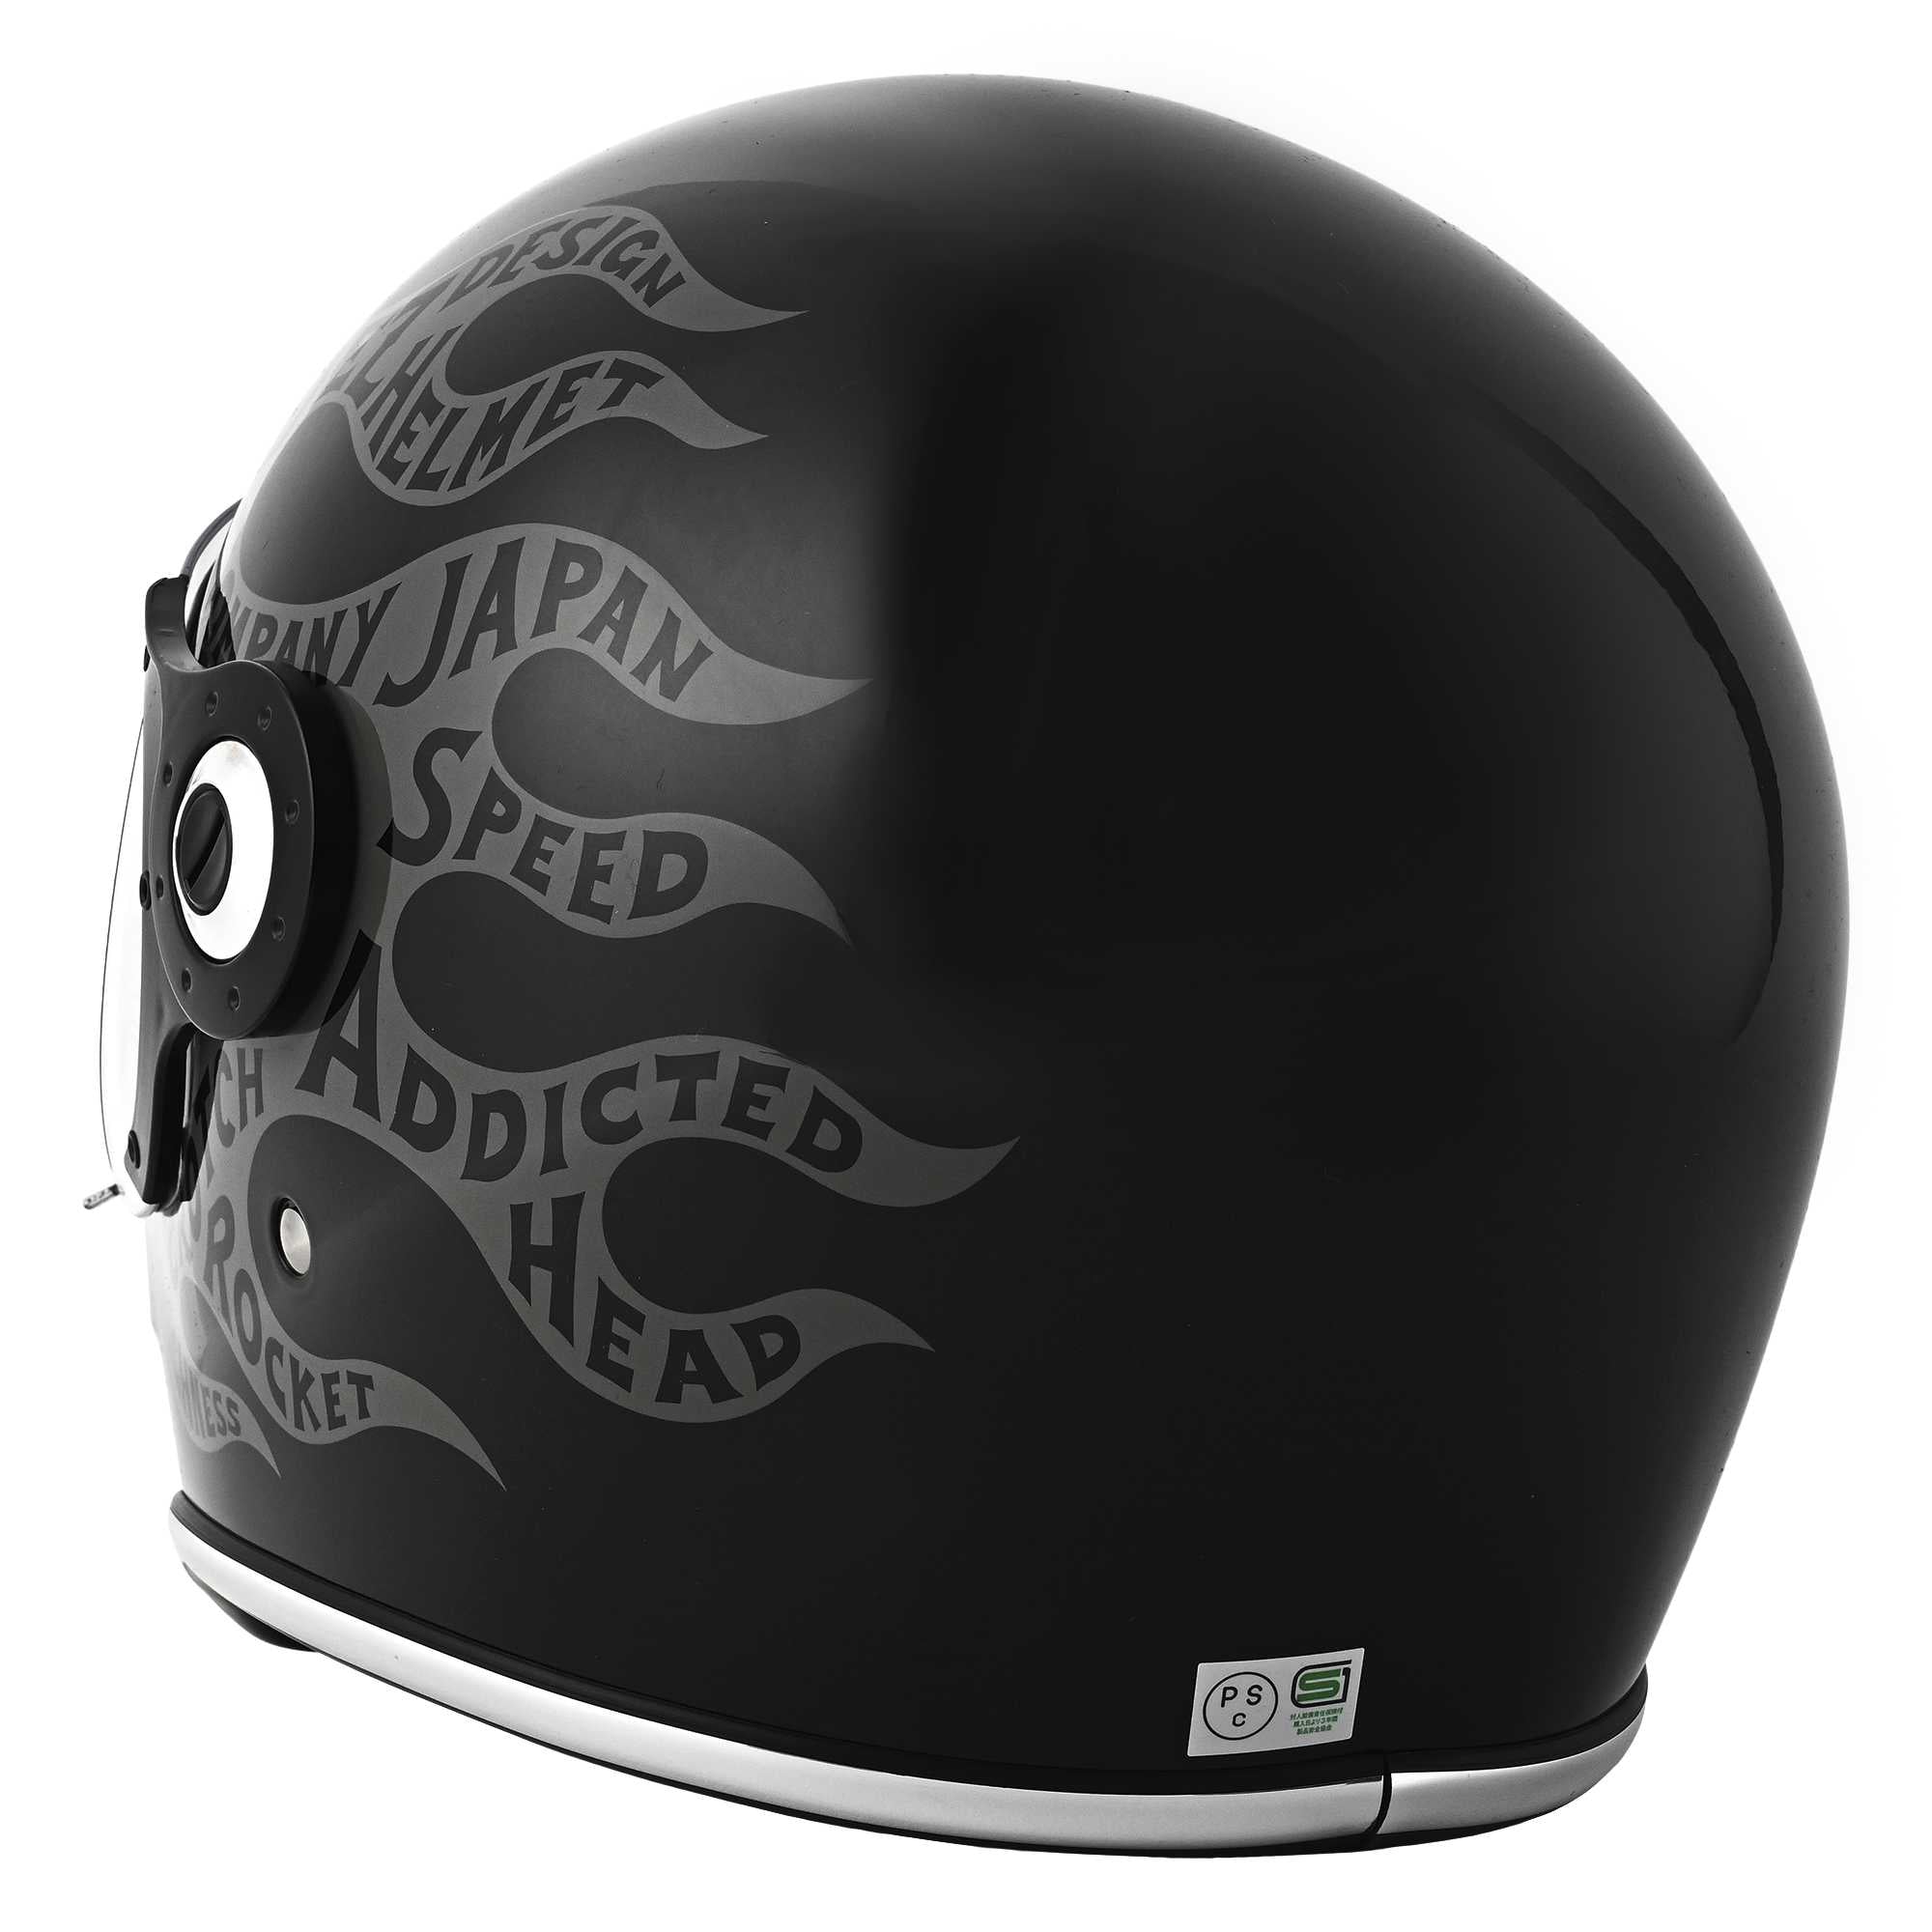 RIDEZ XX HELMET Limited Quantity Model GRAFFITI FLARE Full Face Motorcycle Helmet